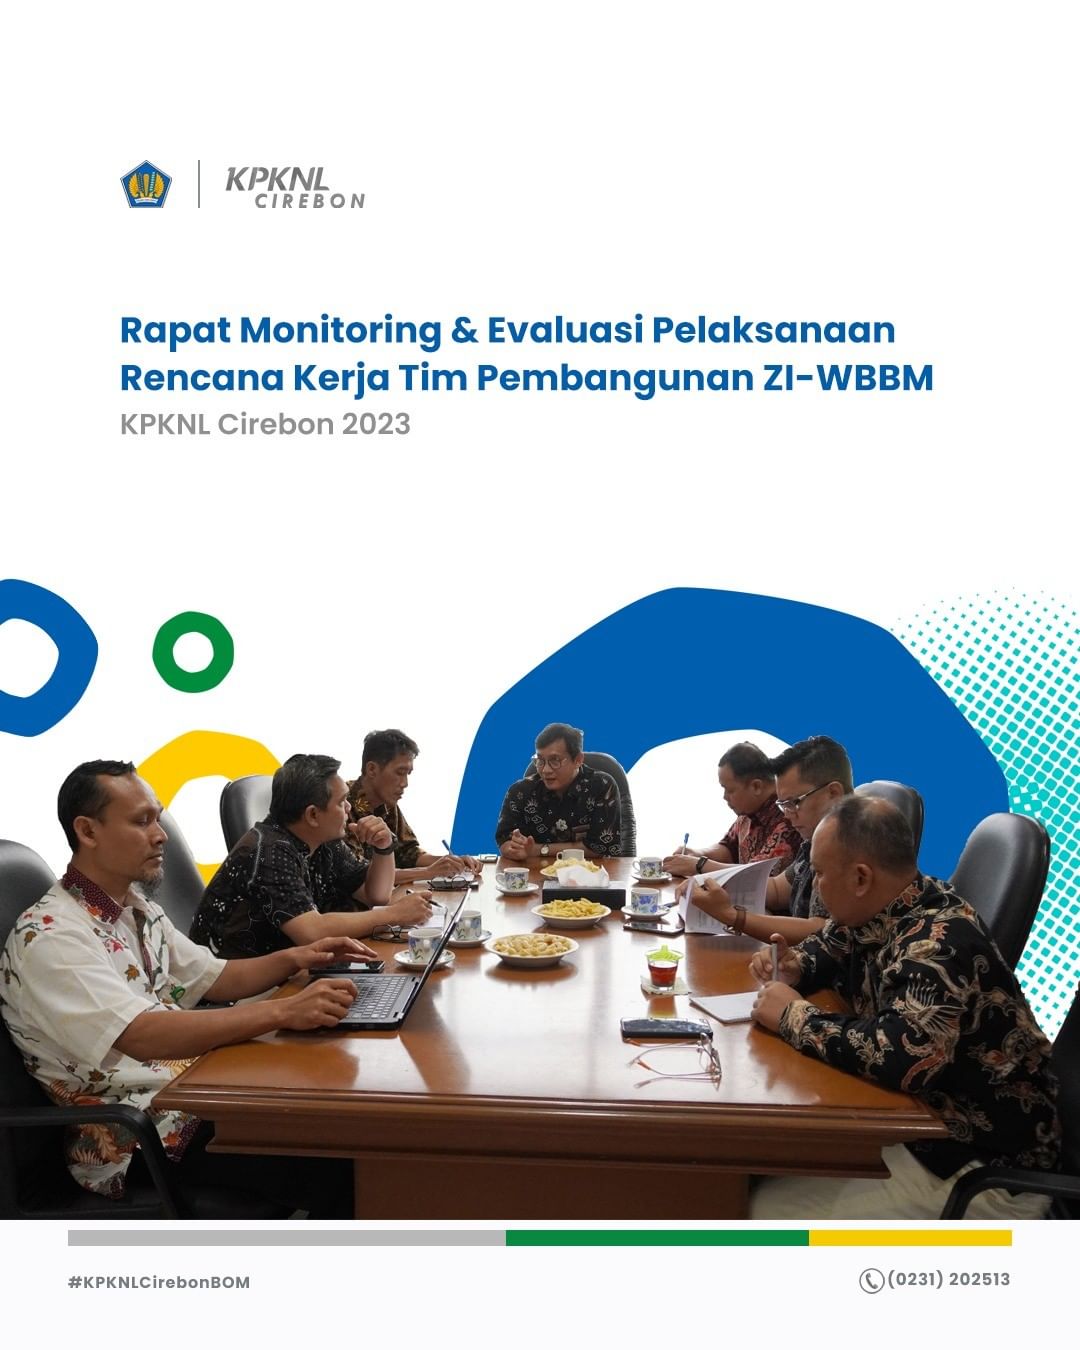 Rapat Monitoring dan Evaluasi Pelaksanaan Rencana Kerja Tim Pembangunan ZI-WBBM KPKNL Cirebon 2023